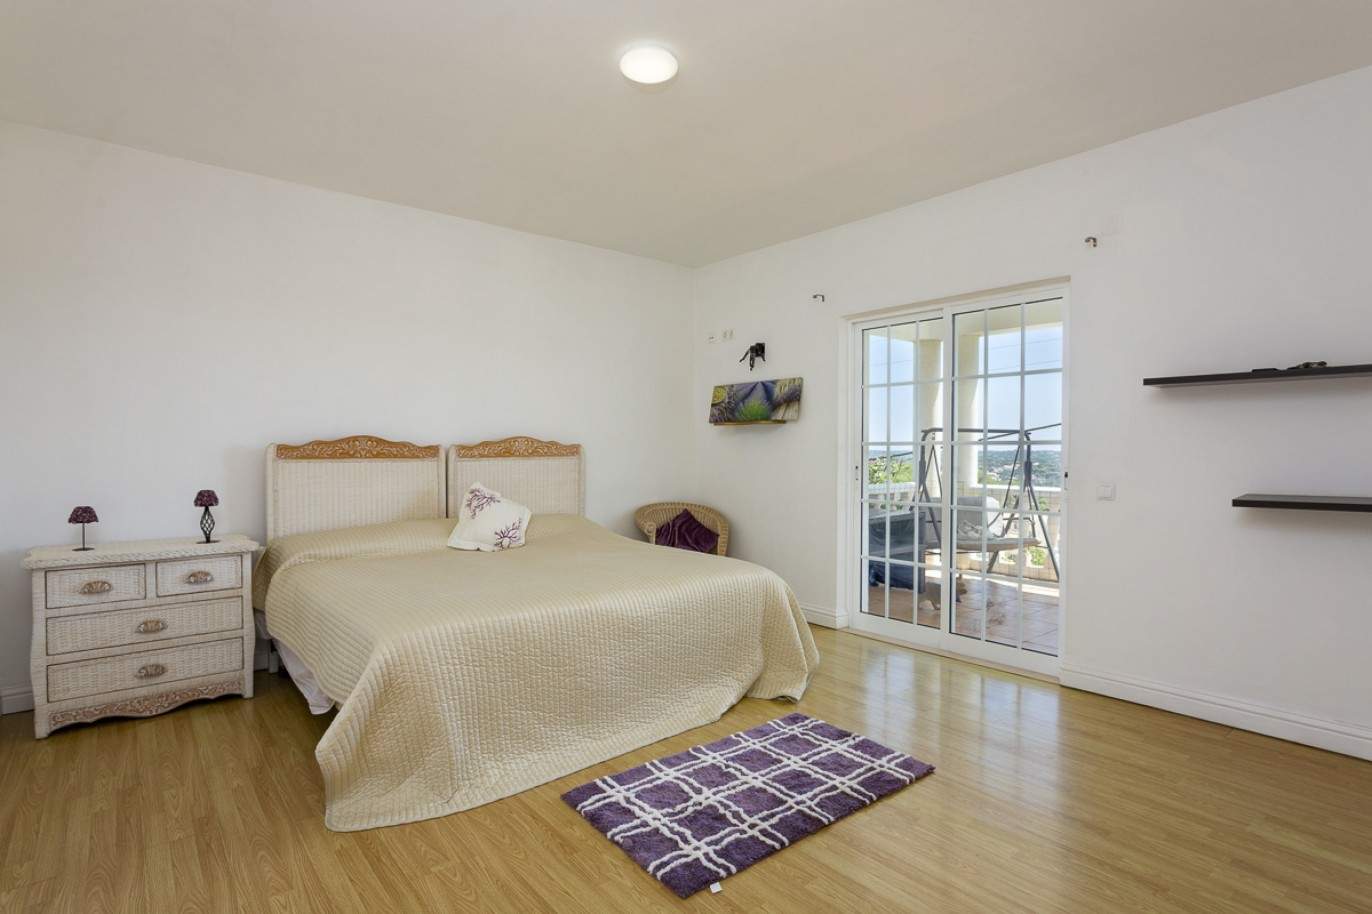 4 Bedroom Villa with sea view, for sale in Boliqueime, Algarve_209947